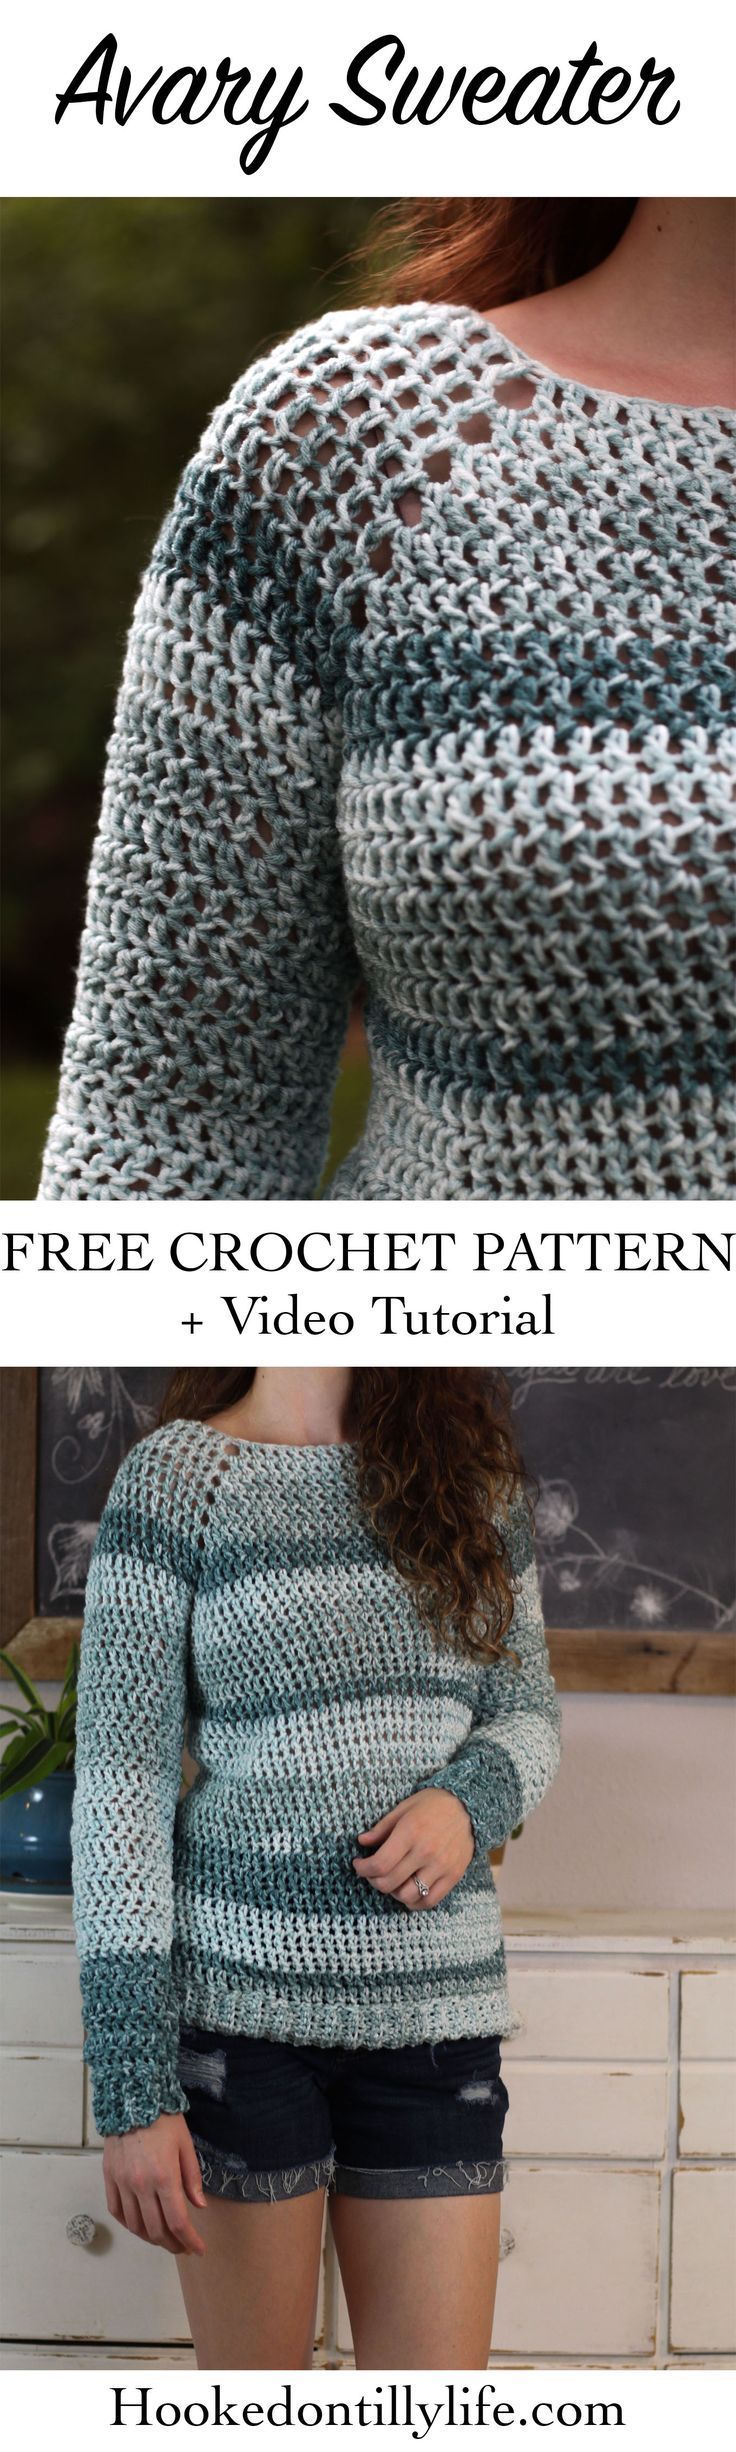 1576241206_476_The-Avary-Sweater-Free-Crochet-Pattern.jpg